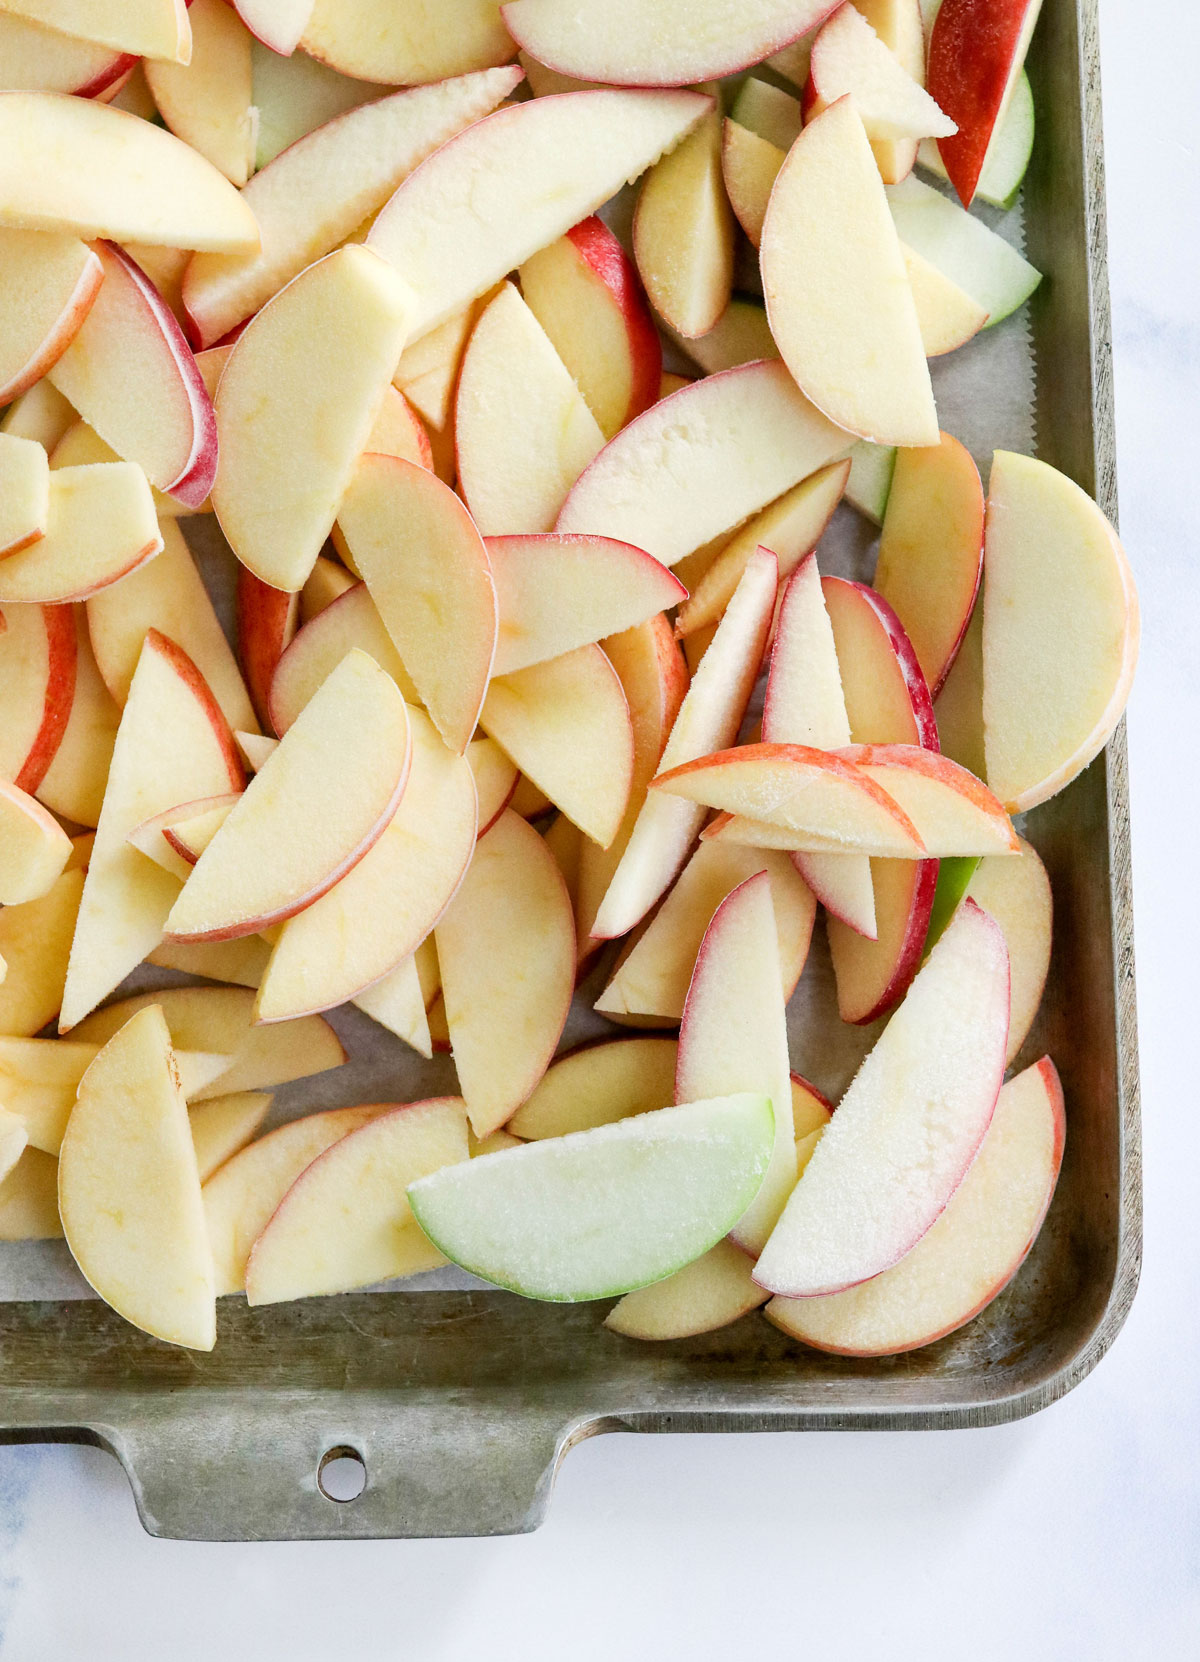 frozen apples on baking sheet